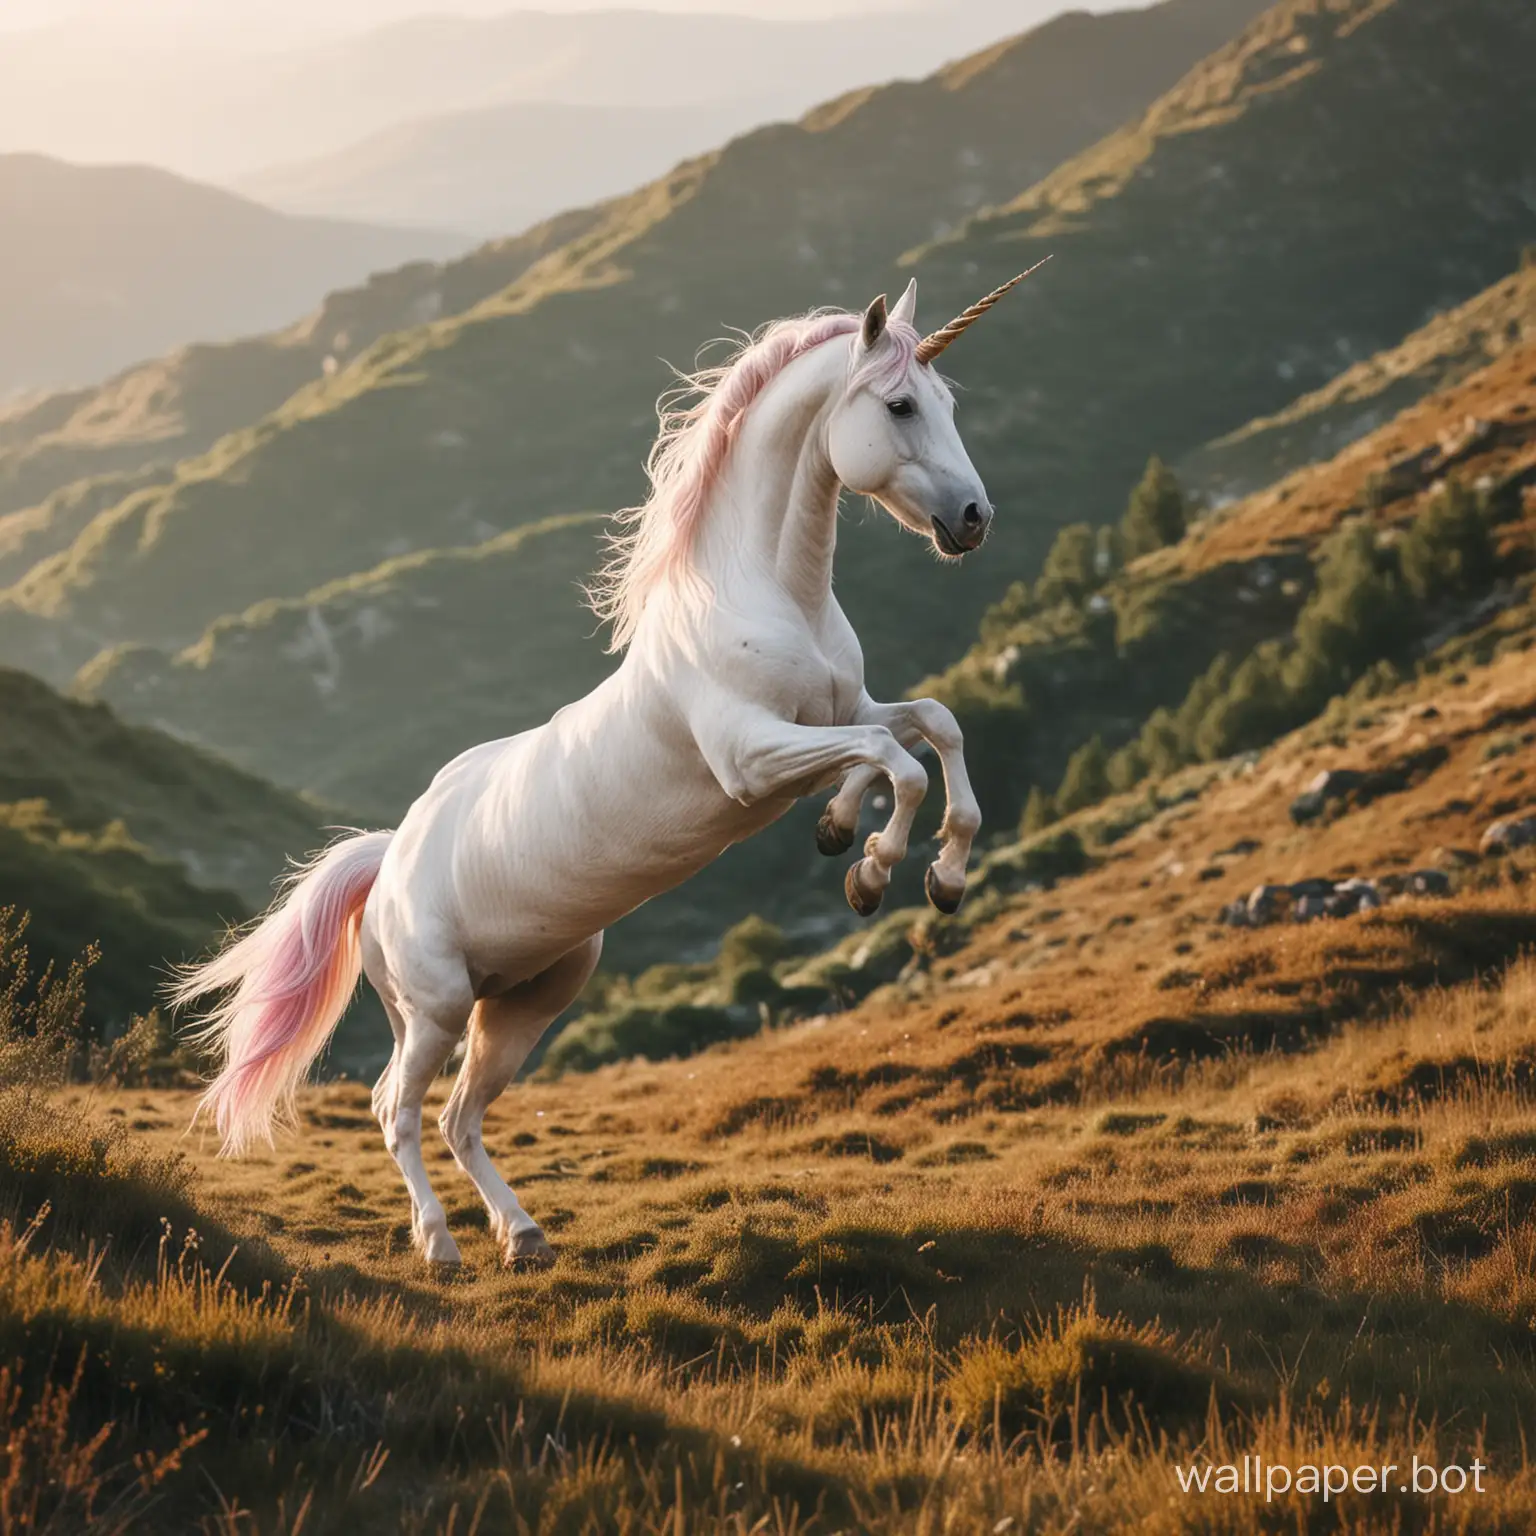 Unicorn Dancing in the hills